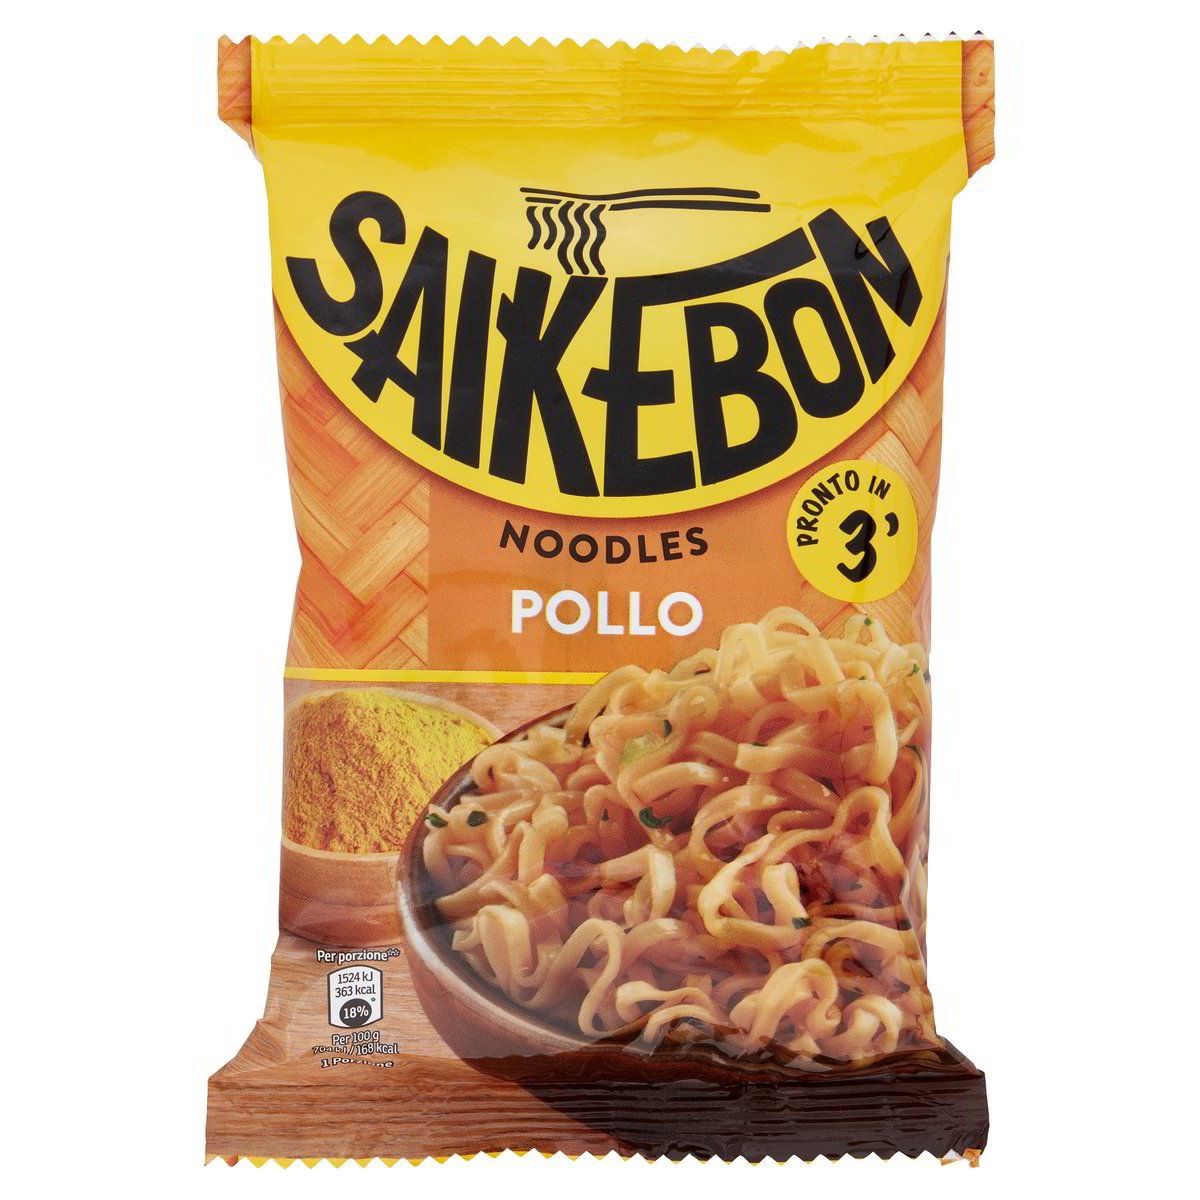 Saikebon noodles pollo